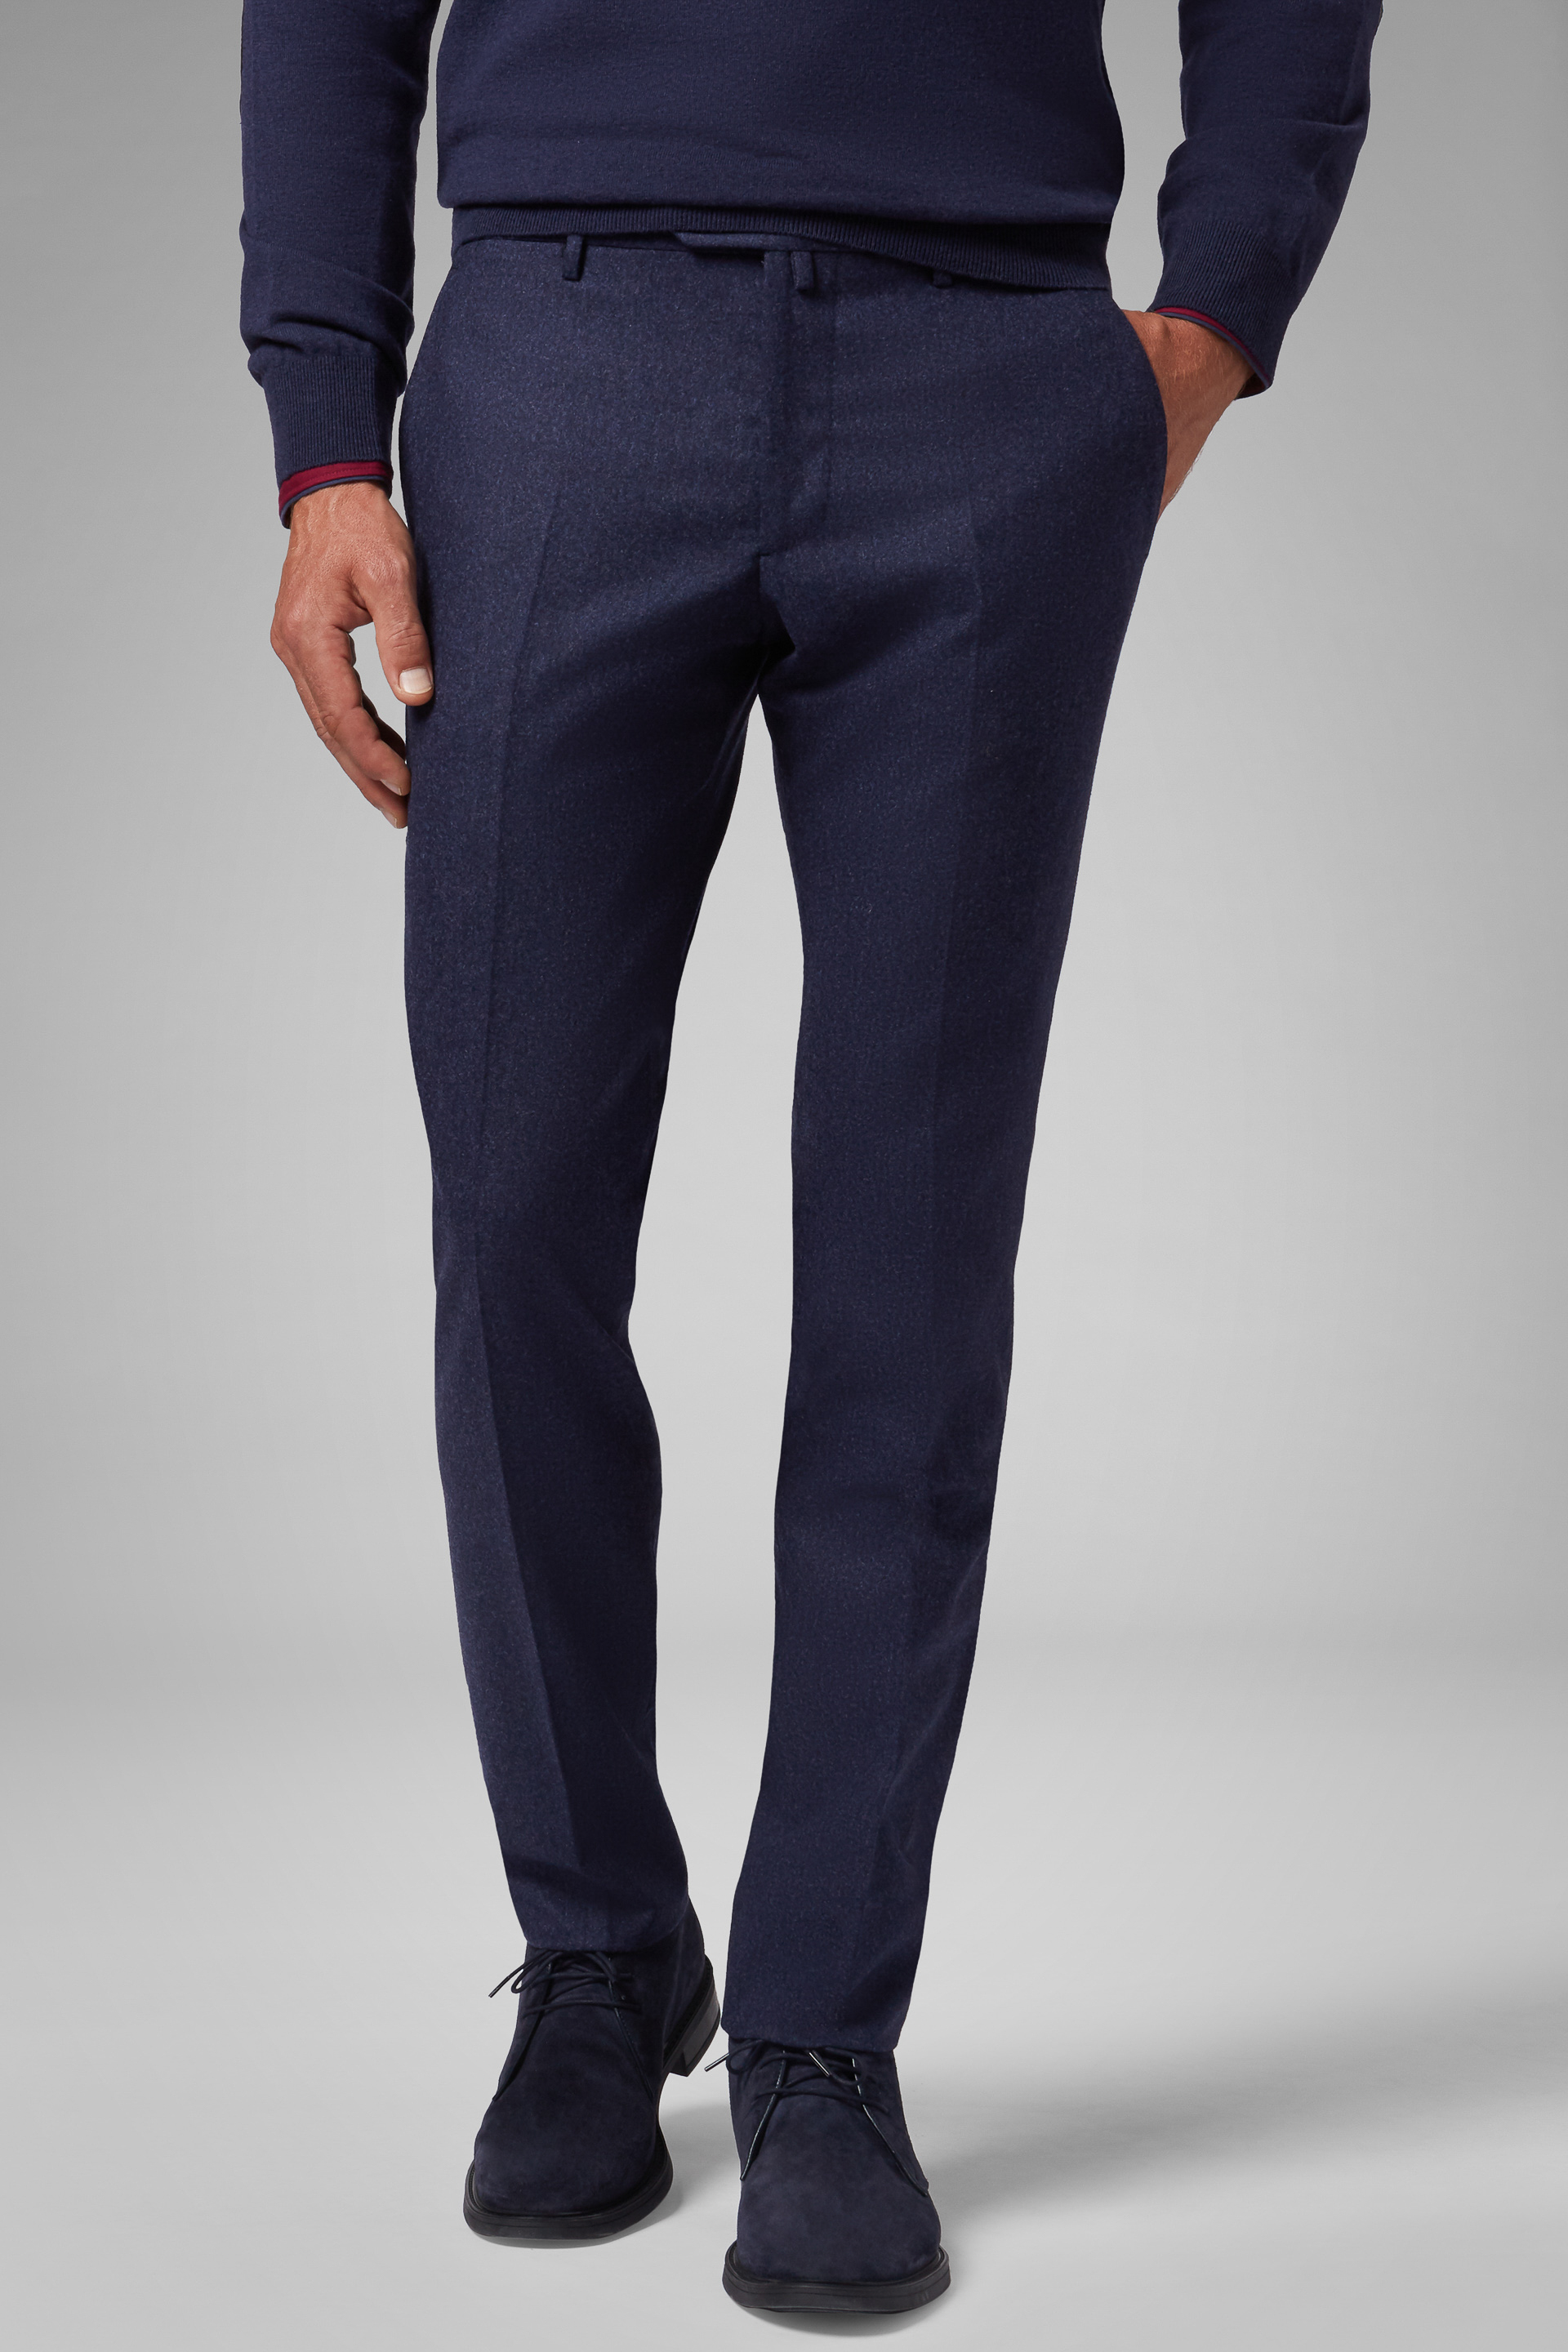 Regent Flannel Wool Trousers  Charcoal Grey  Regent Tailoring